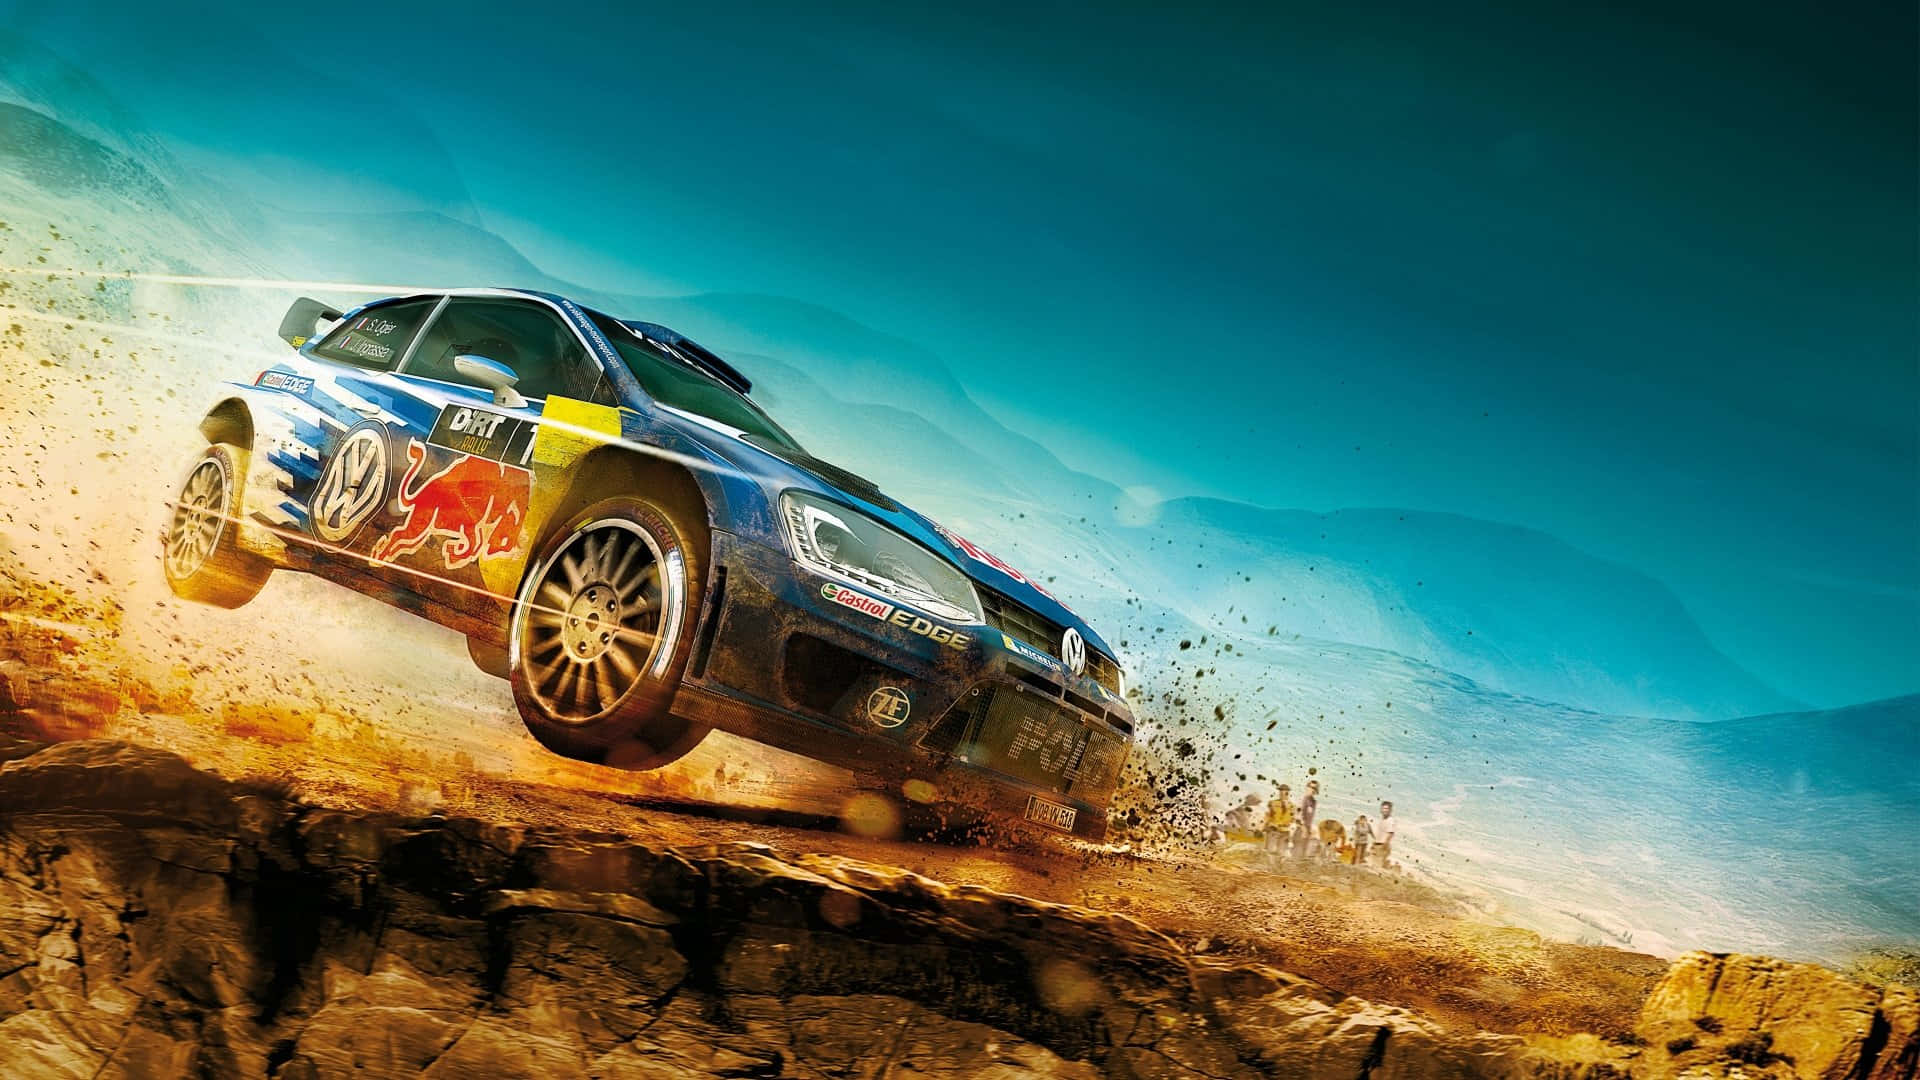 "Take on rocky terrain in Dirt Rally"